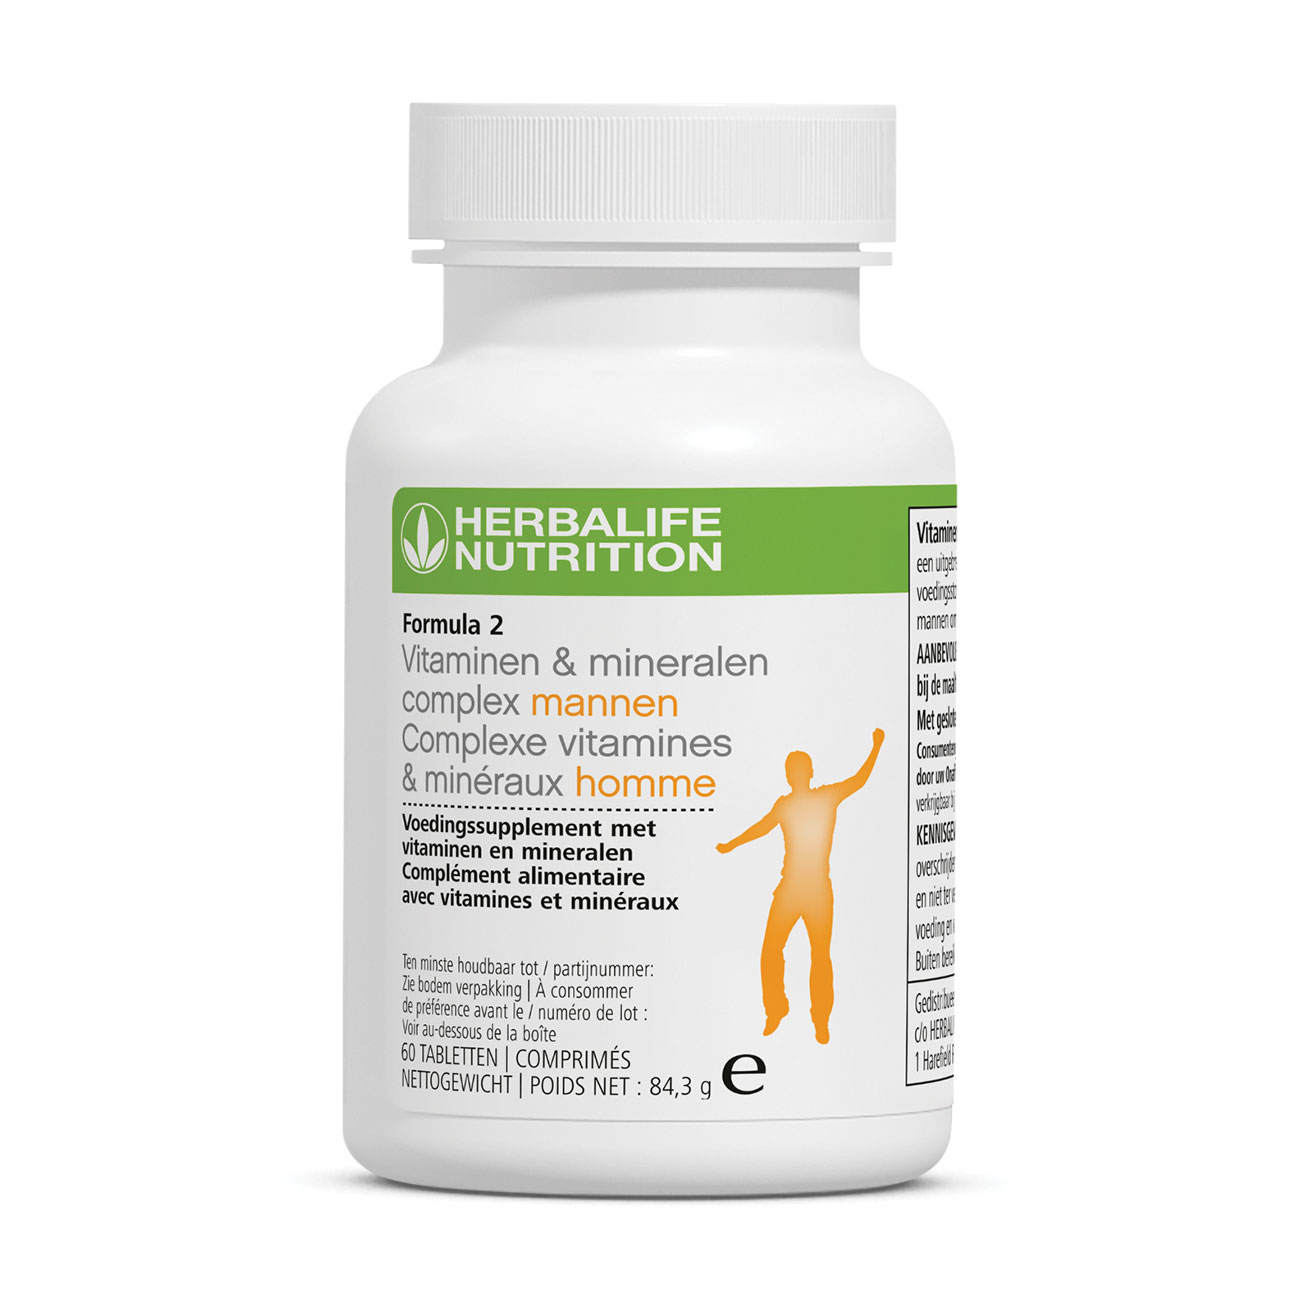 Formula 2 Vitaminen & mineralencomplex mannen multivitaminen supplement product shot